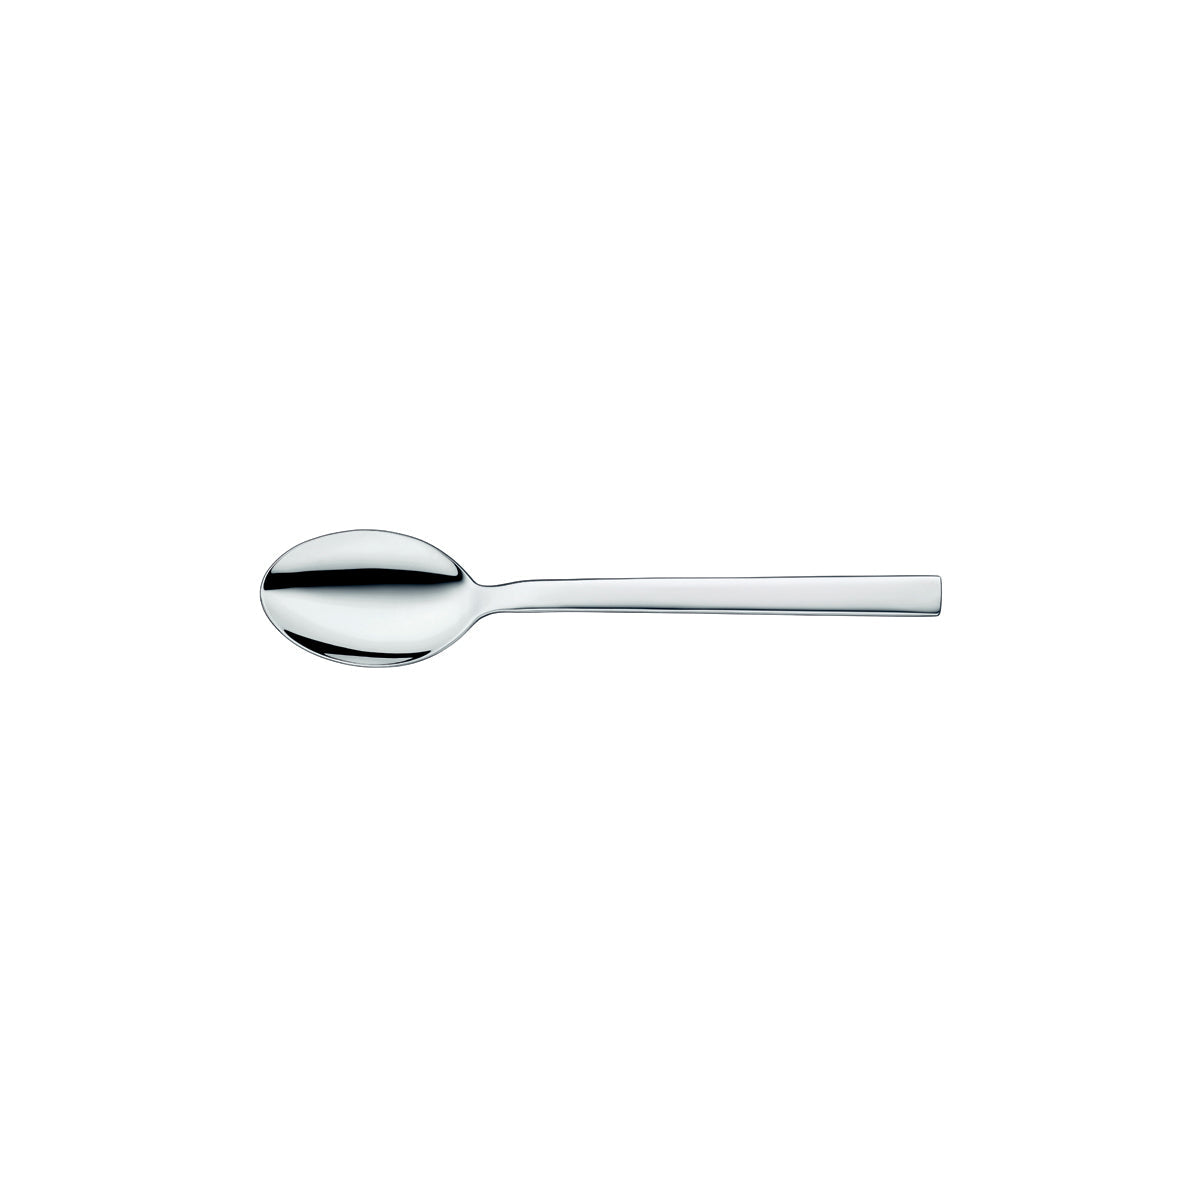 12.5301.6040 WMF Unic Table Spoon Stainless Steel Tomkin Australia Hospitality Supplies